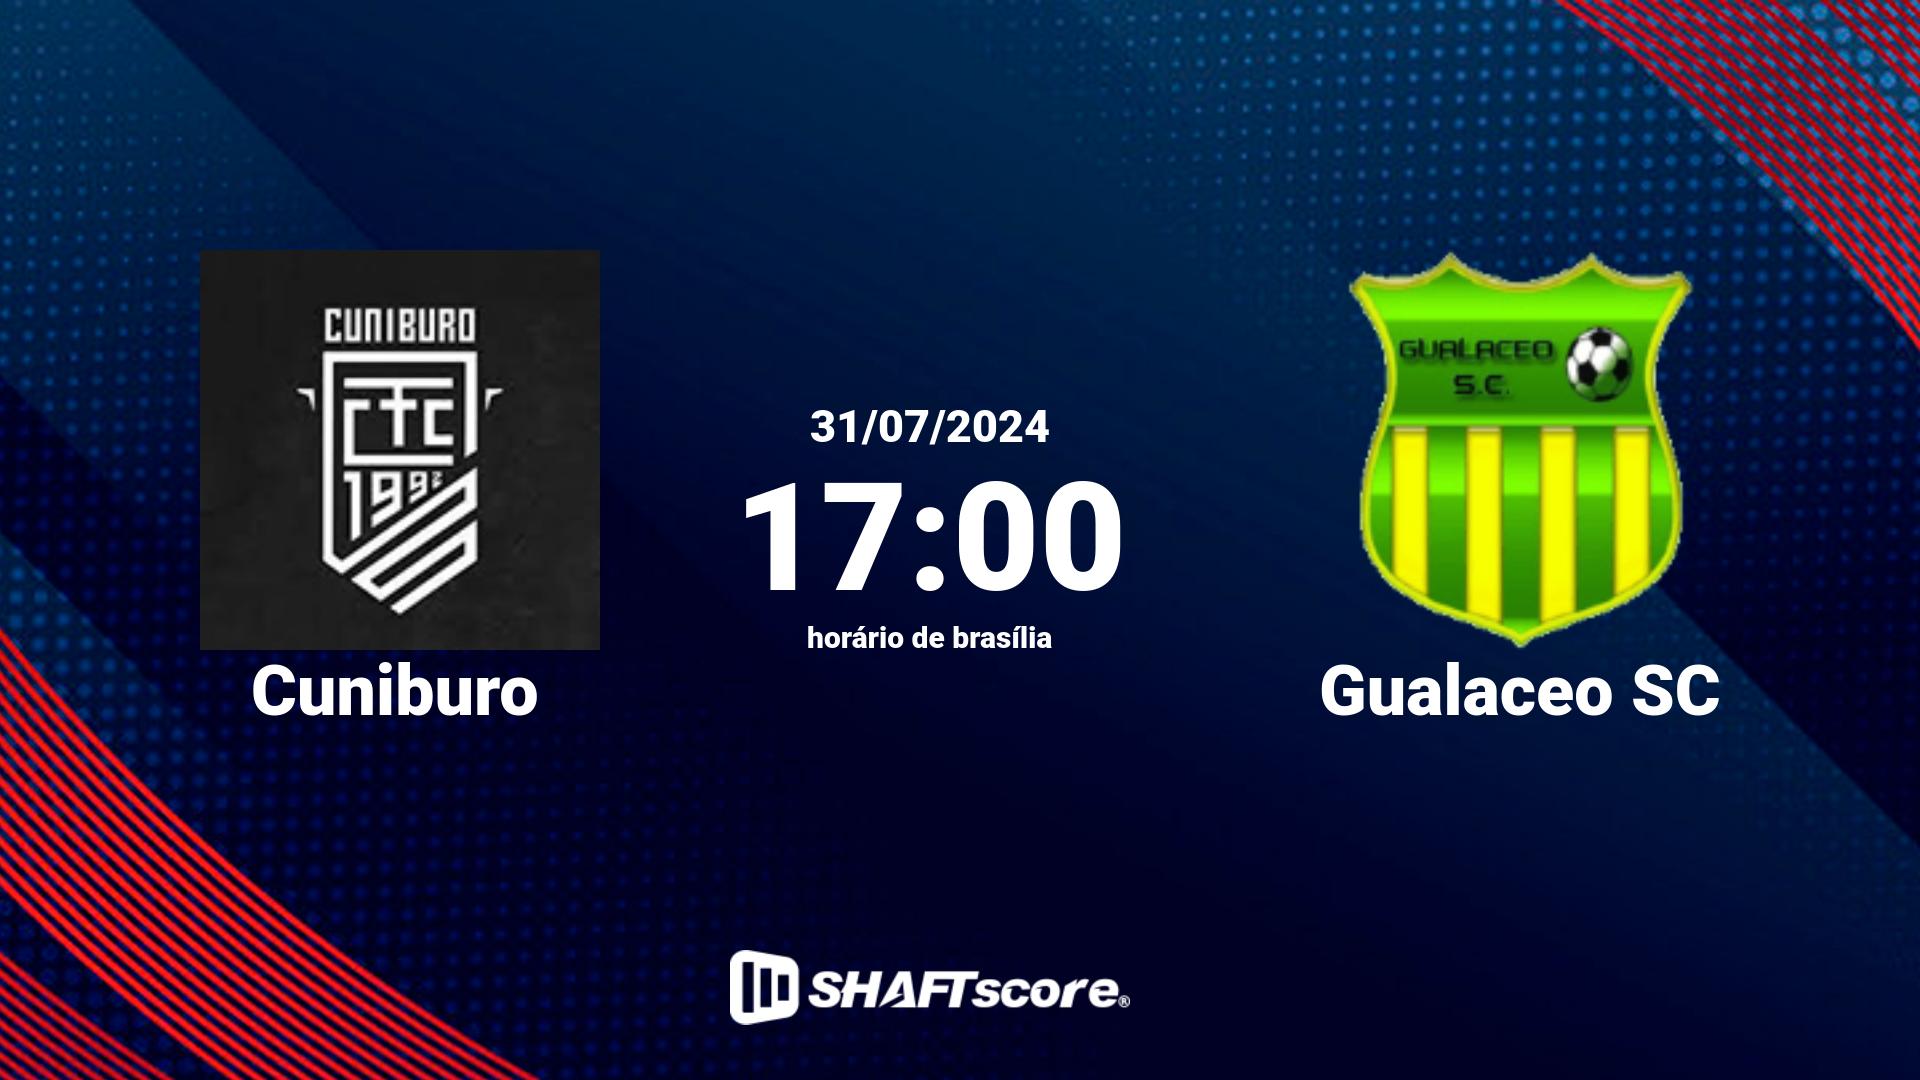 Estatísticas do jogo Cuniburo vs Gualaceo SC 31.07 17:00